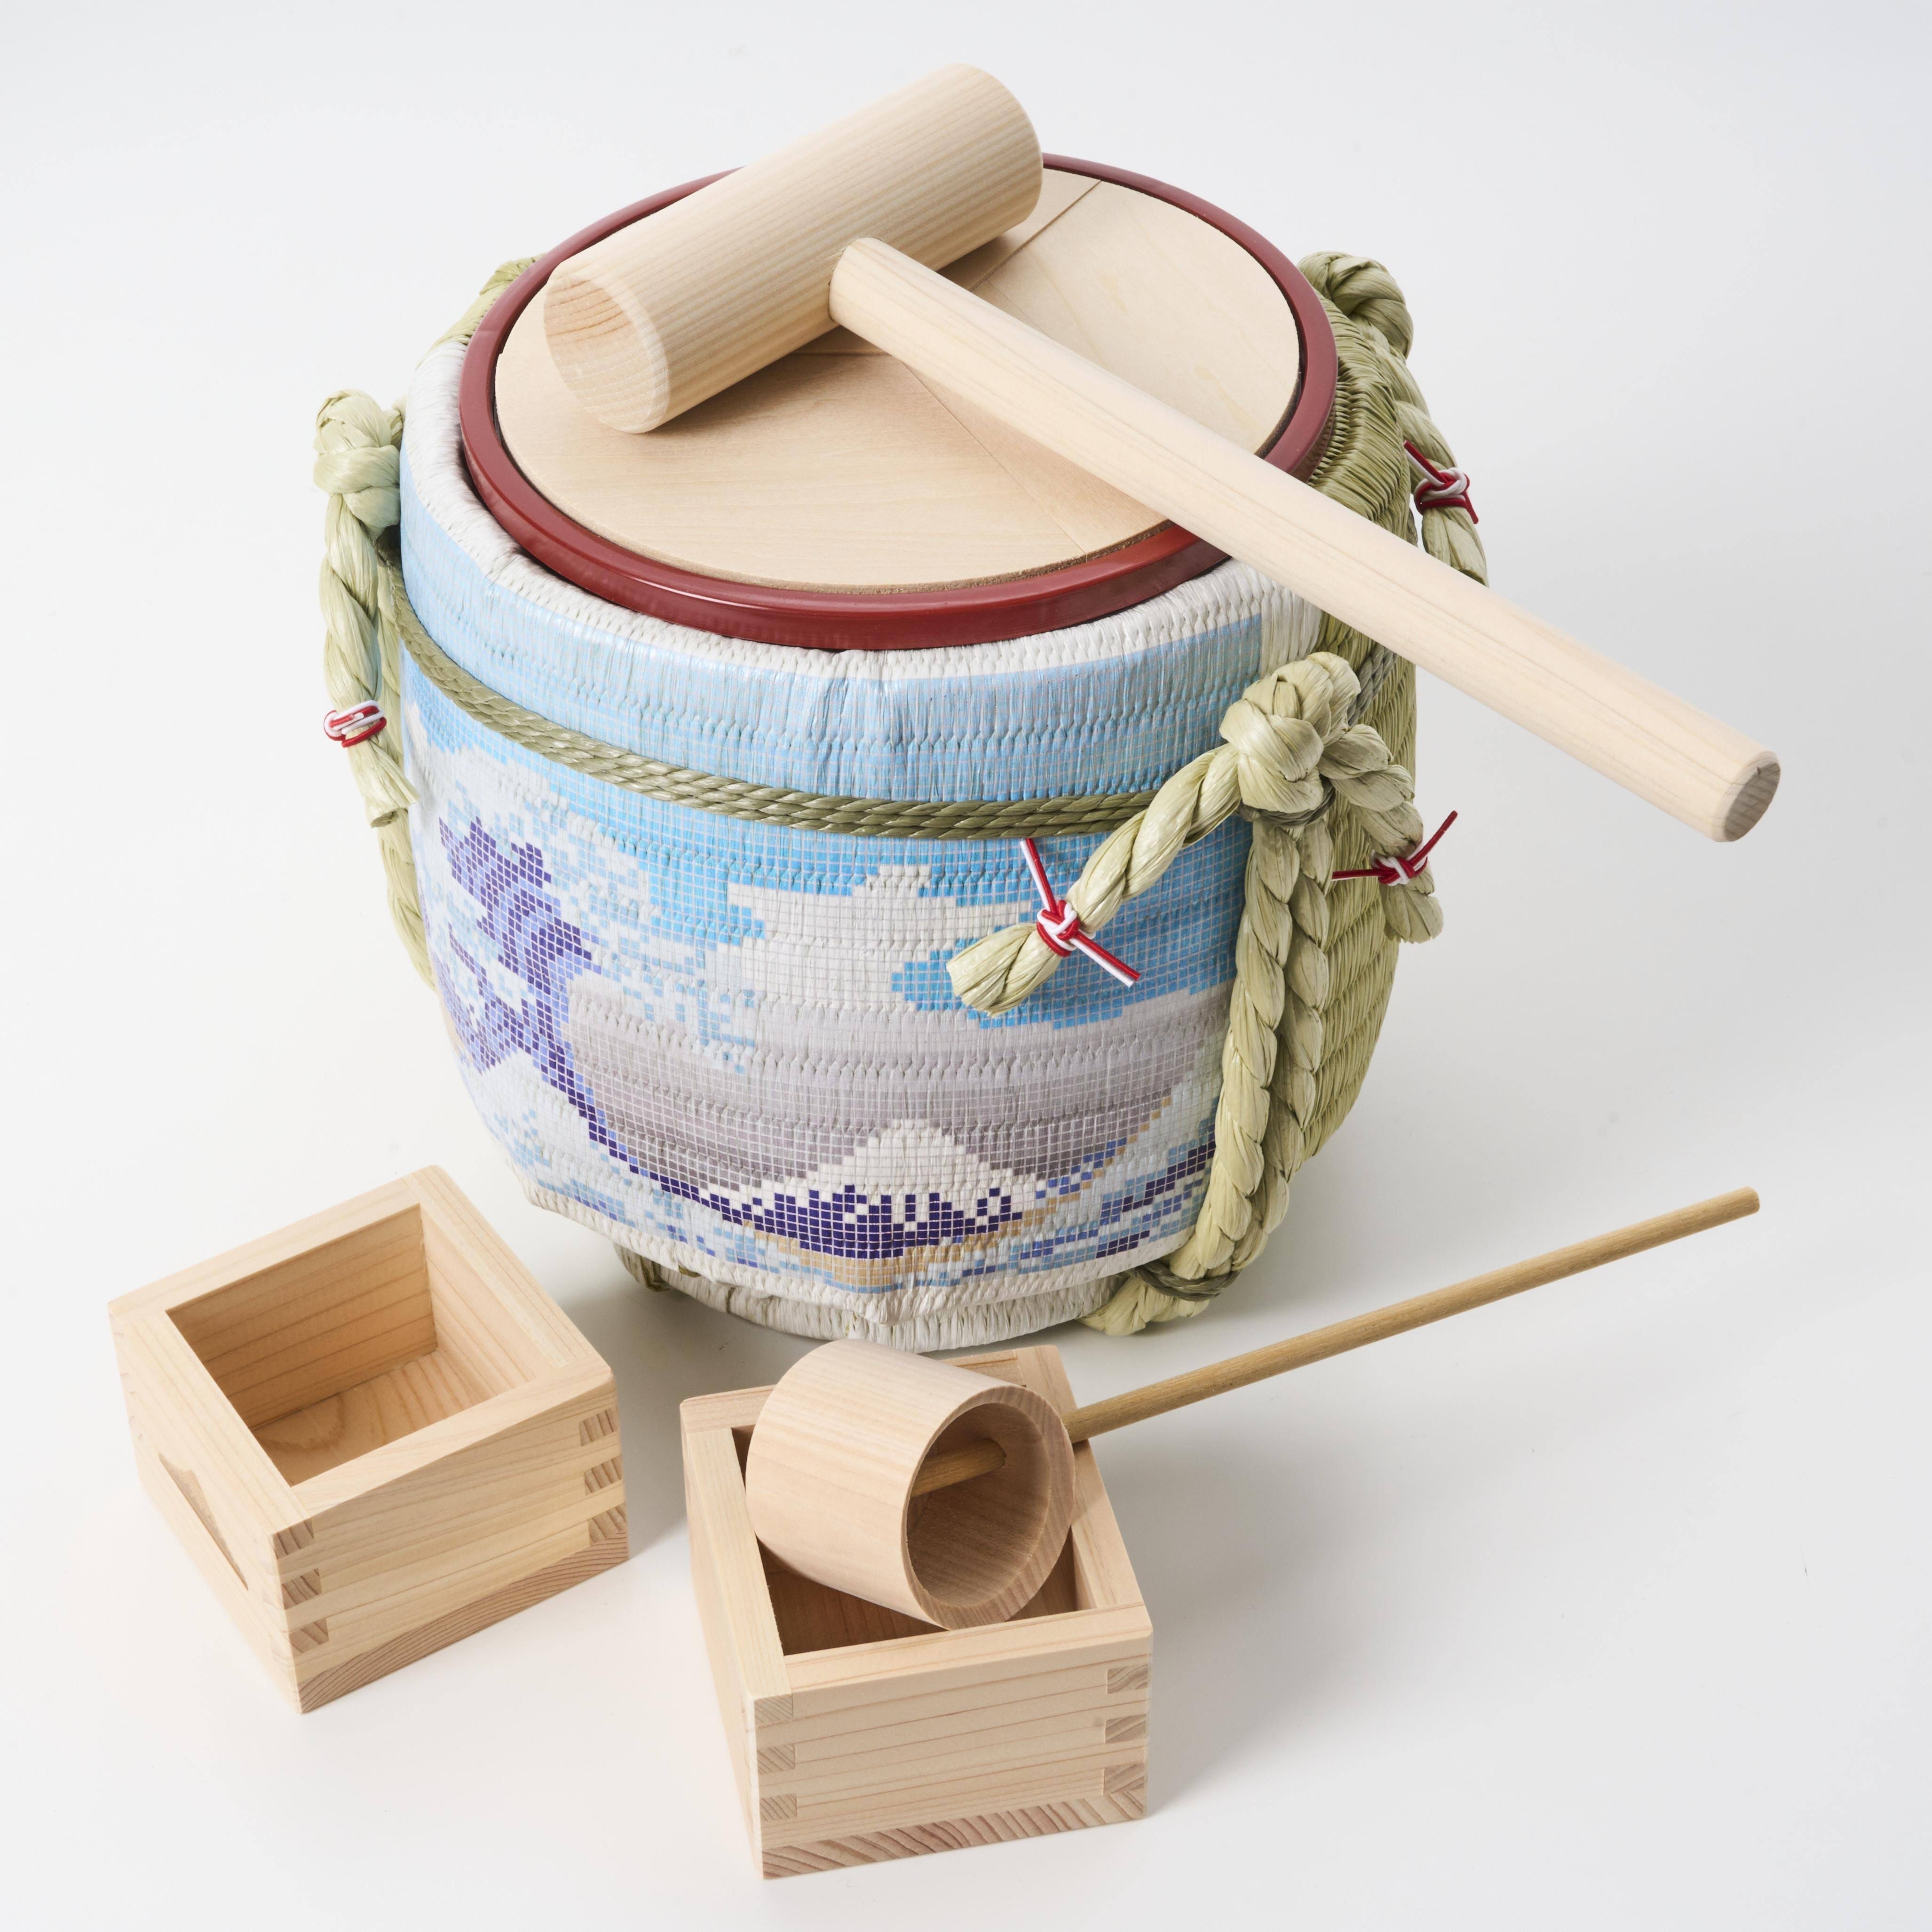 Mini Komodaru Sake-Barrel Set: Celebrate Japanese Style with Hokusai's Great Wave | Image